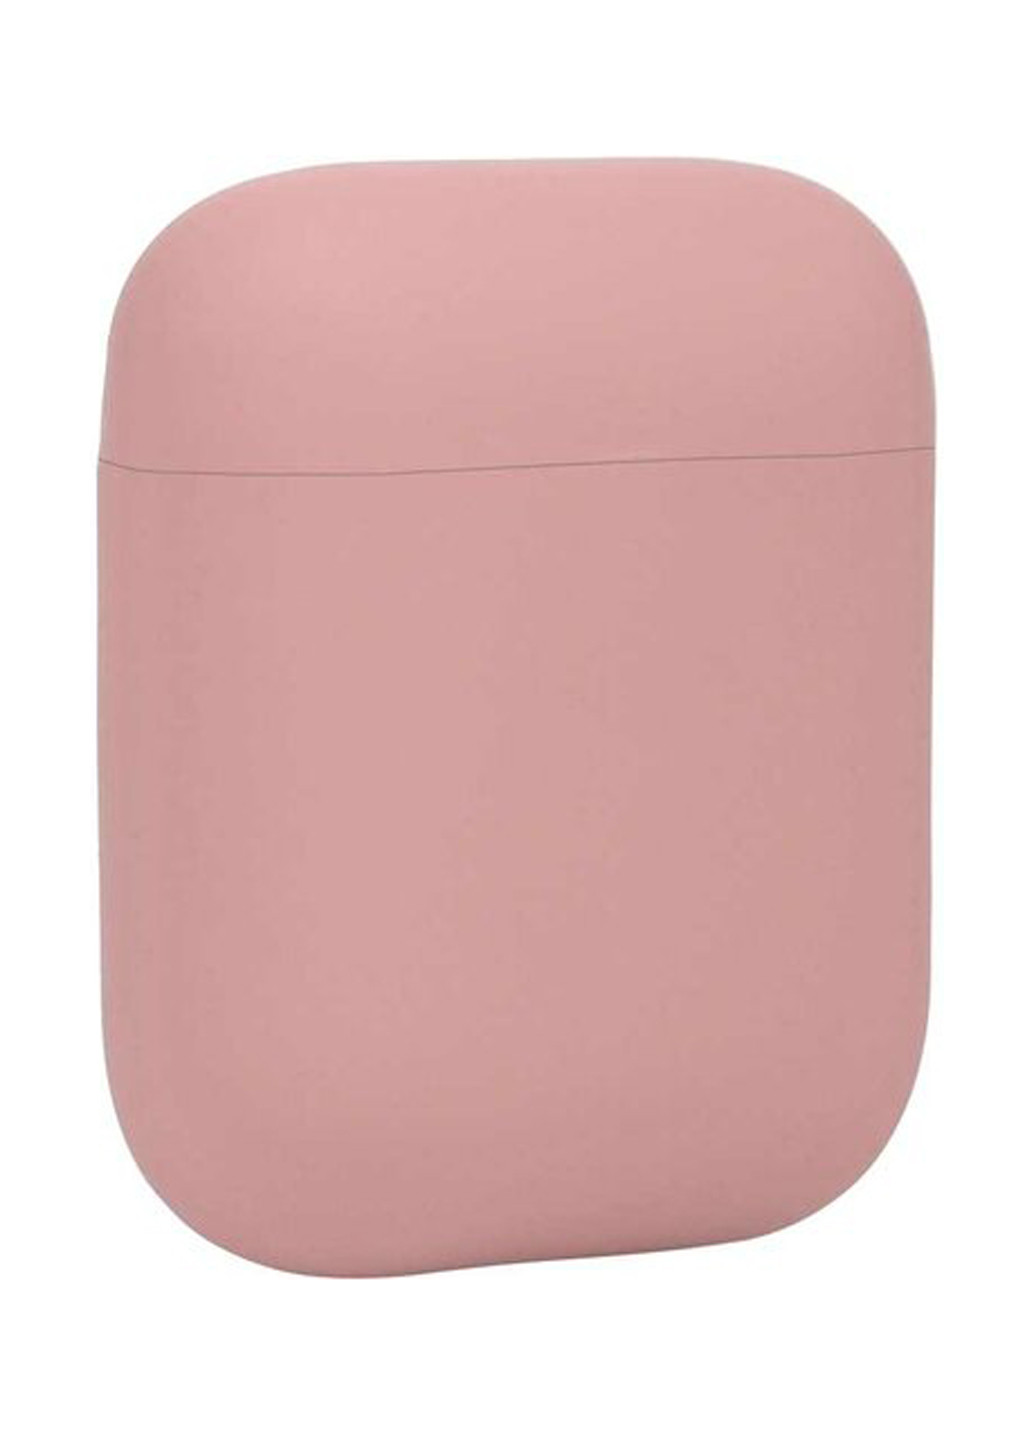 Чехол Silicon для Apple AirPods Pink (703348) BeCover silicon для apple airpods pink (703348) (144451896)